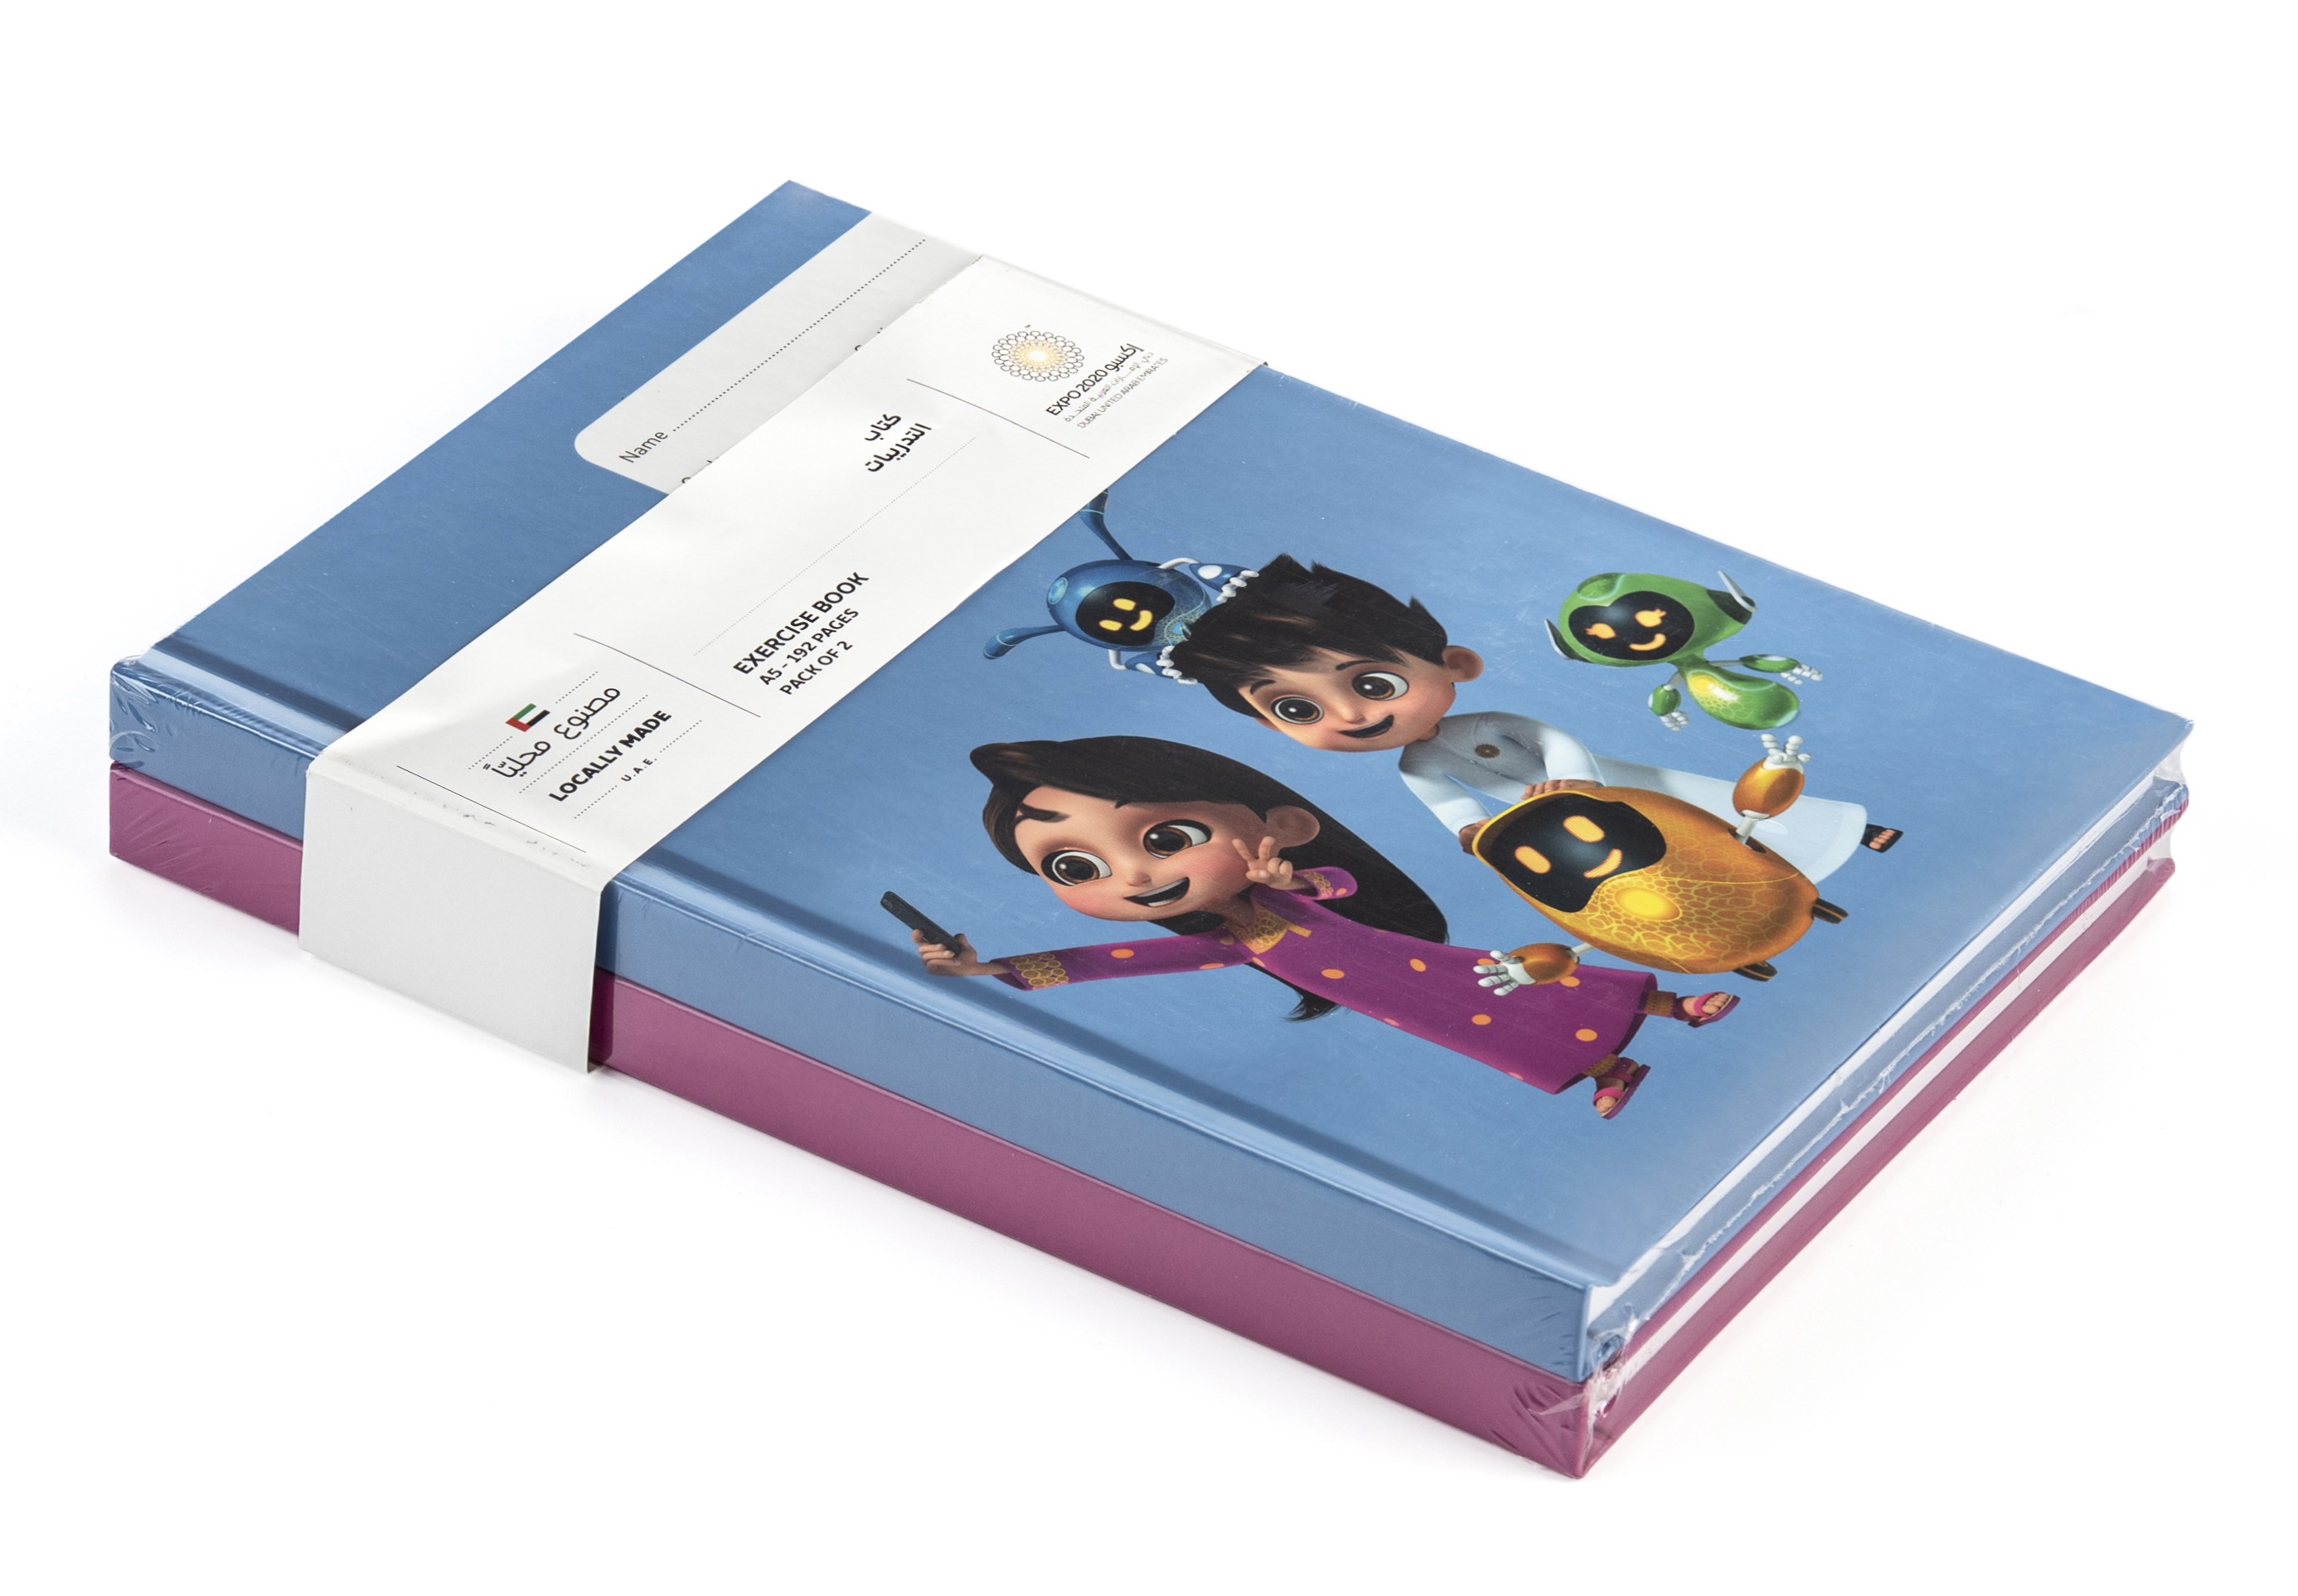 Expo 2020 Dubai Mascots A5 Hardcase Exercise Books Pack of 2 - 192 Pages - Latifa